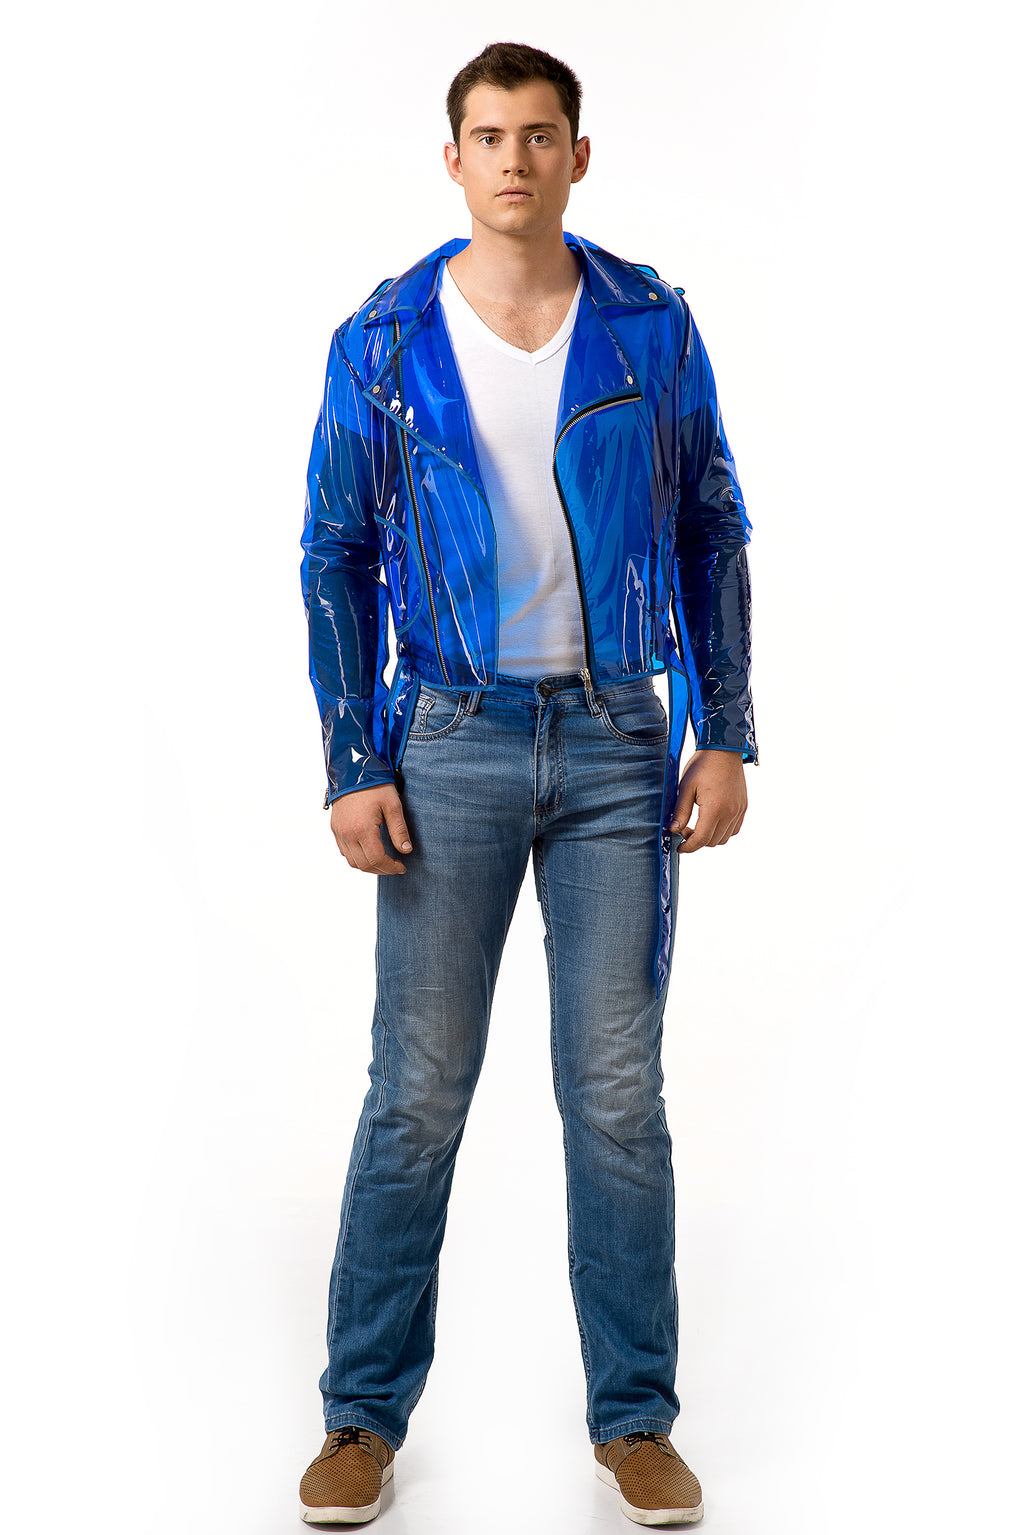 Vinyl Men's Biker Jacket. Motorcycle transparent jacket.